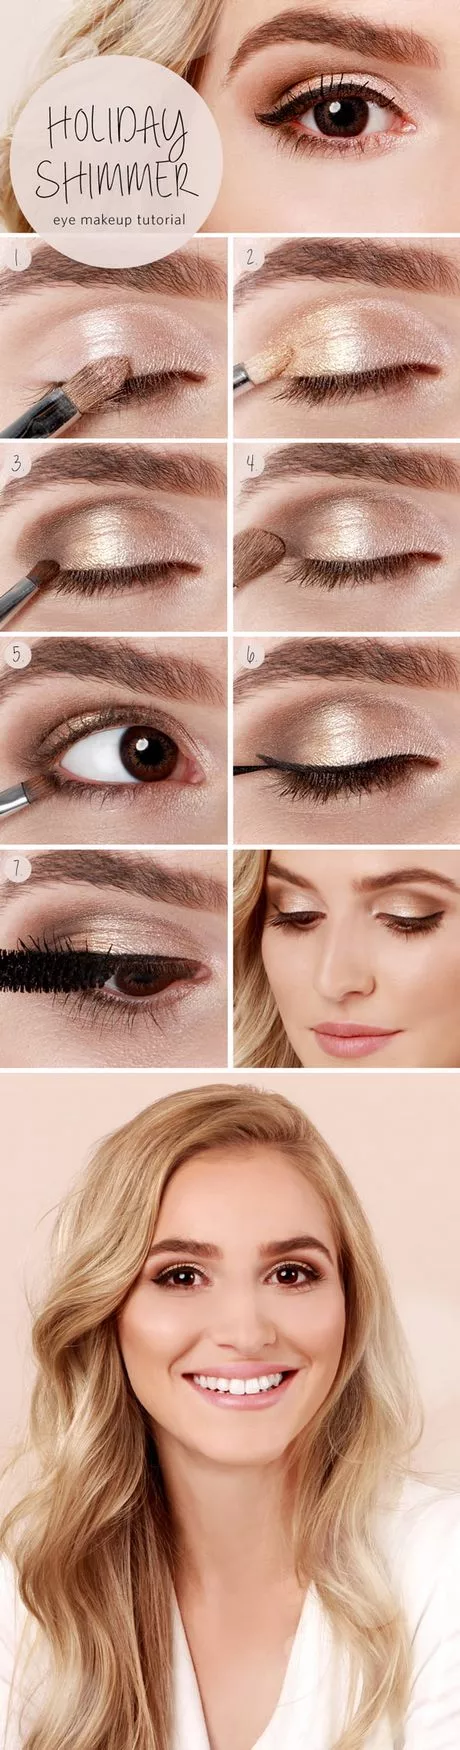 augen-makeup-tutorial-68_7-16 Augen make-up tutorial